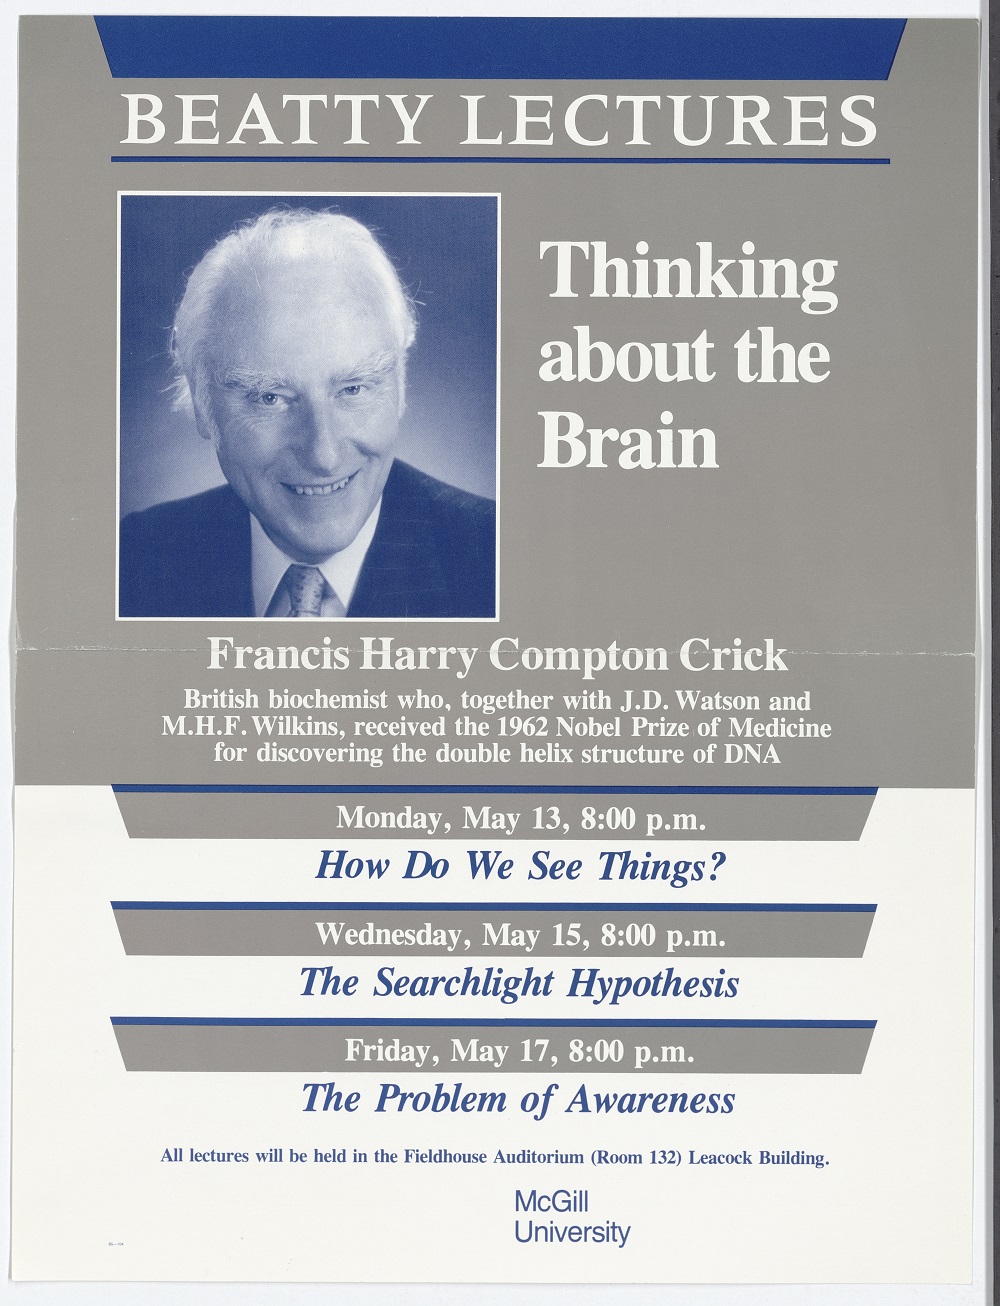 Francis Crick poster